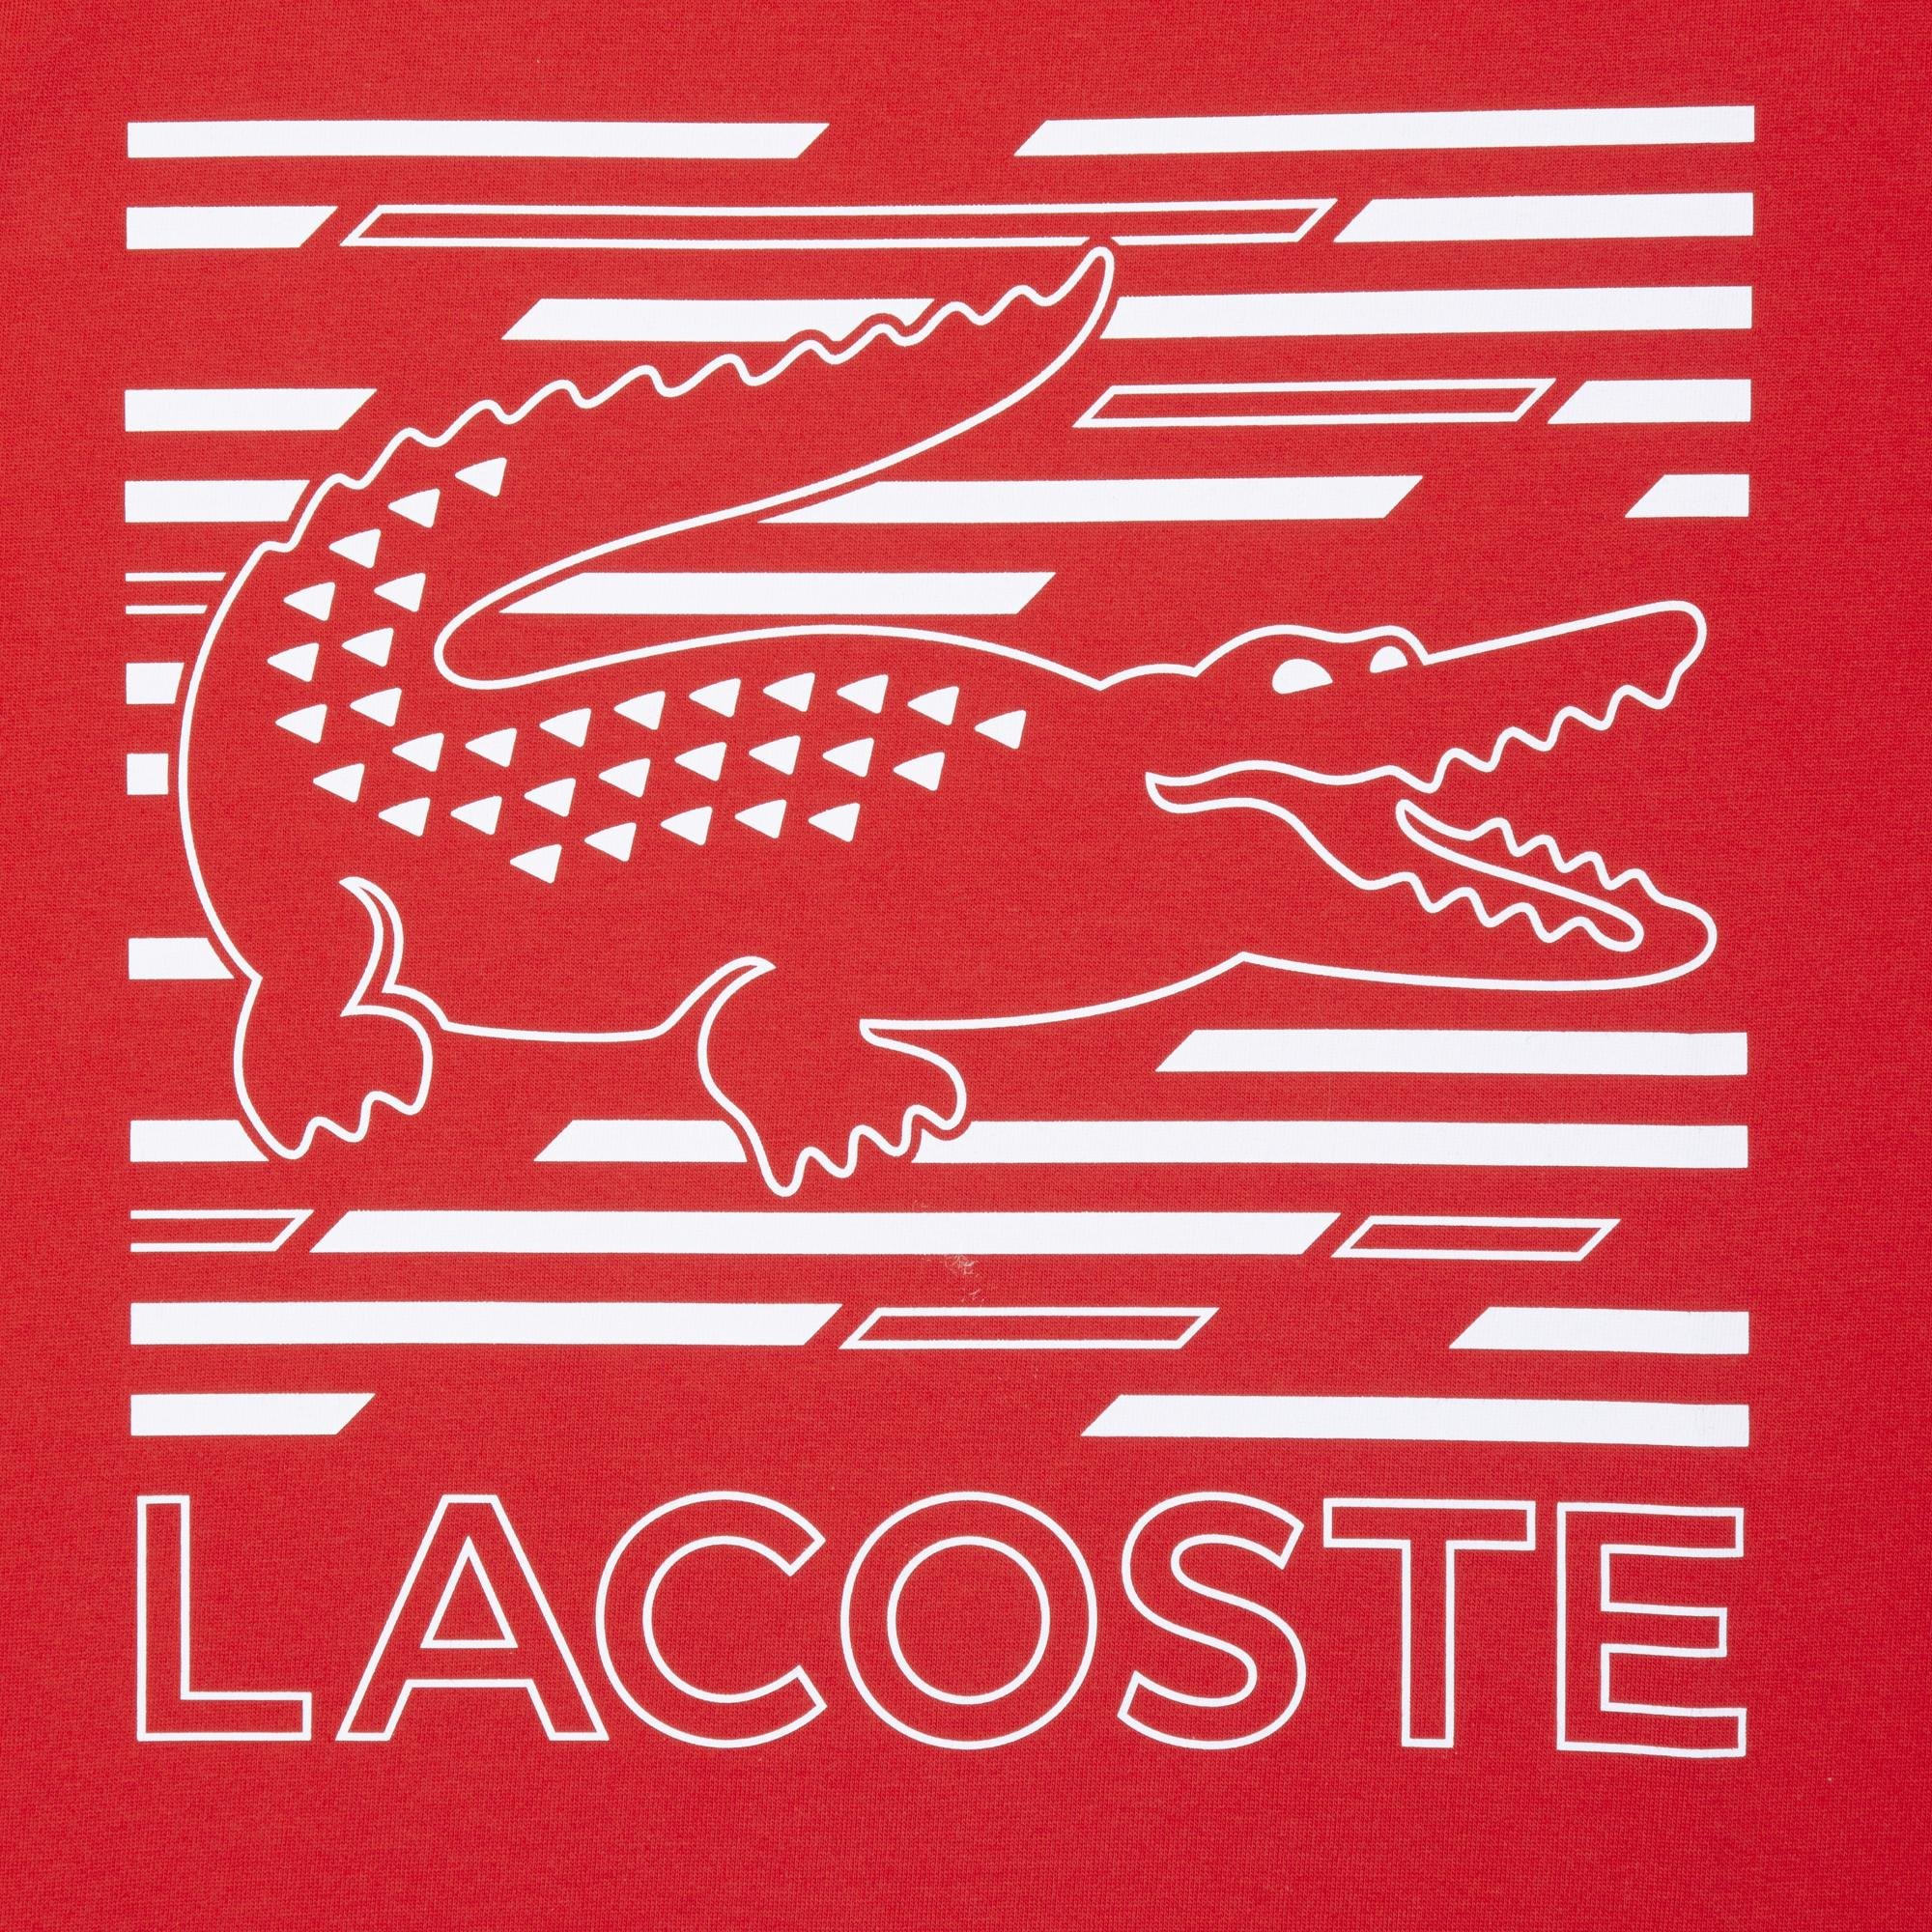 Lacoste Sport Pánské Prodyšné Triko S Potiskem Krokodýla